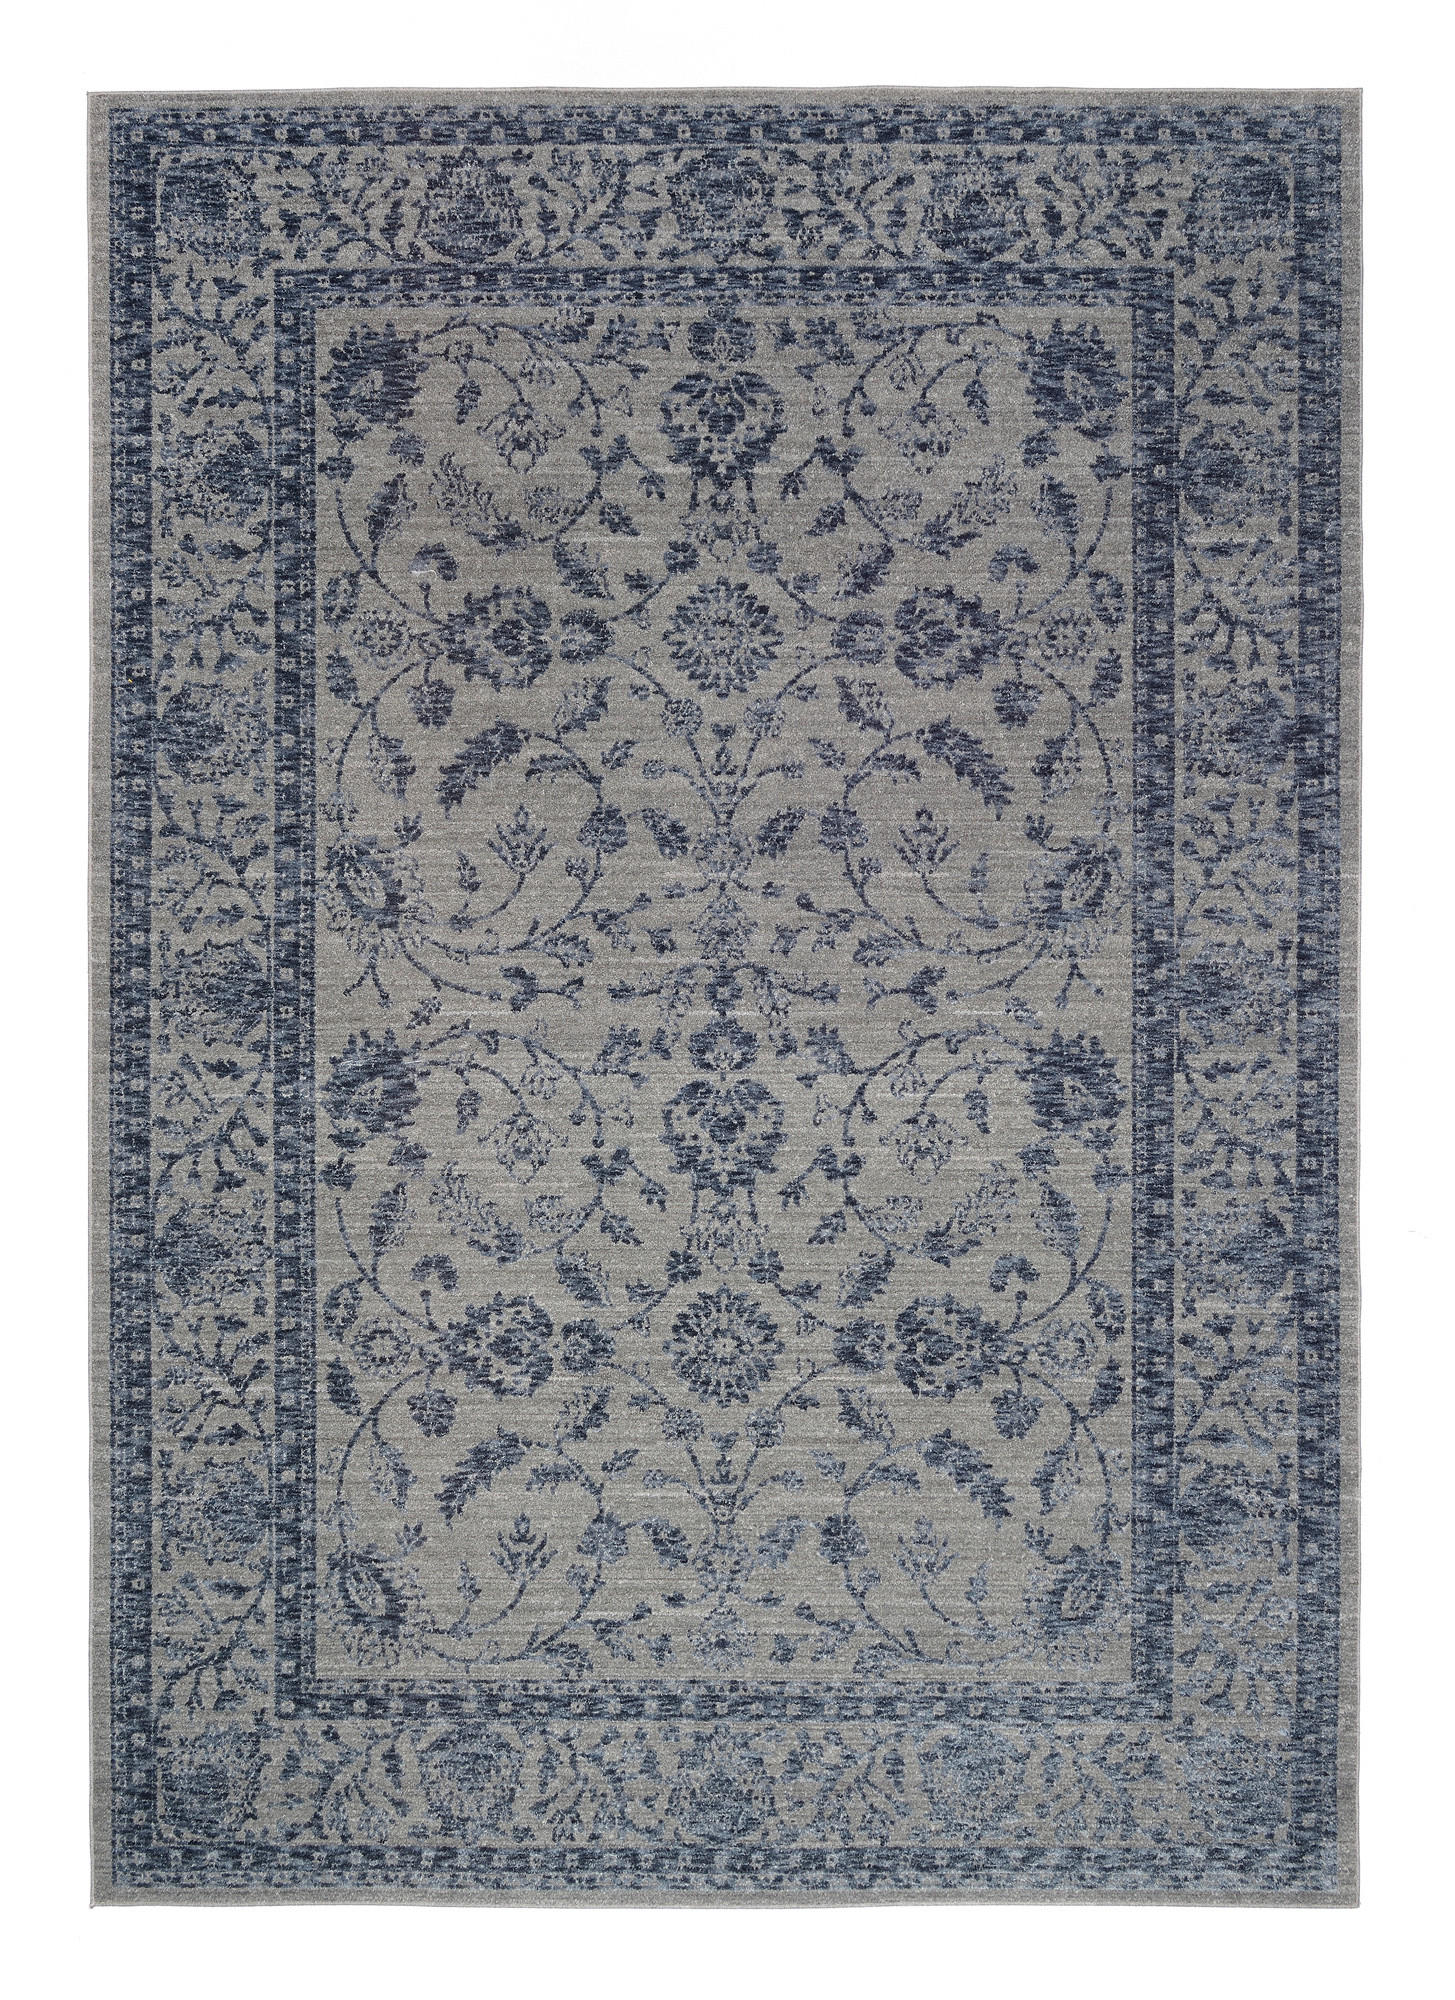 WEBTEPPICH 65/130 cm Denver  - Blau/Dunkelgrau, Design, Textil (65/130cm) - Musterring